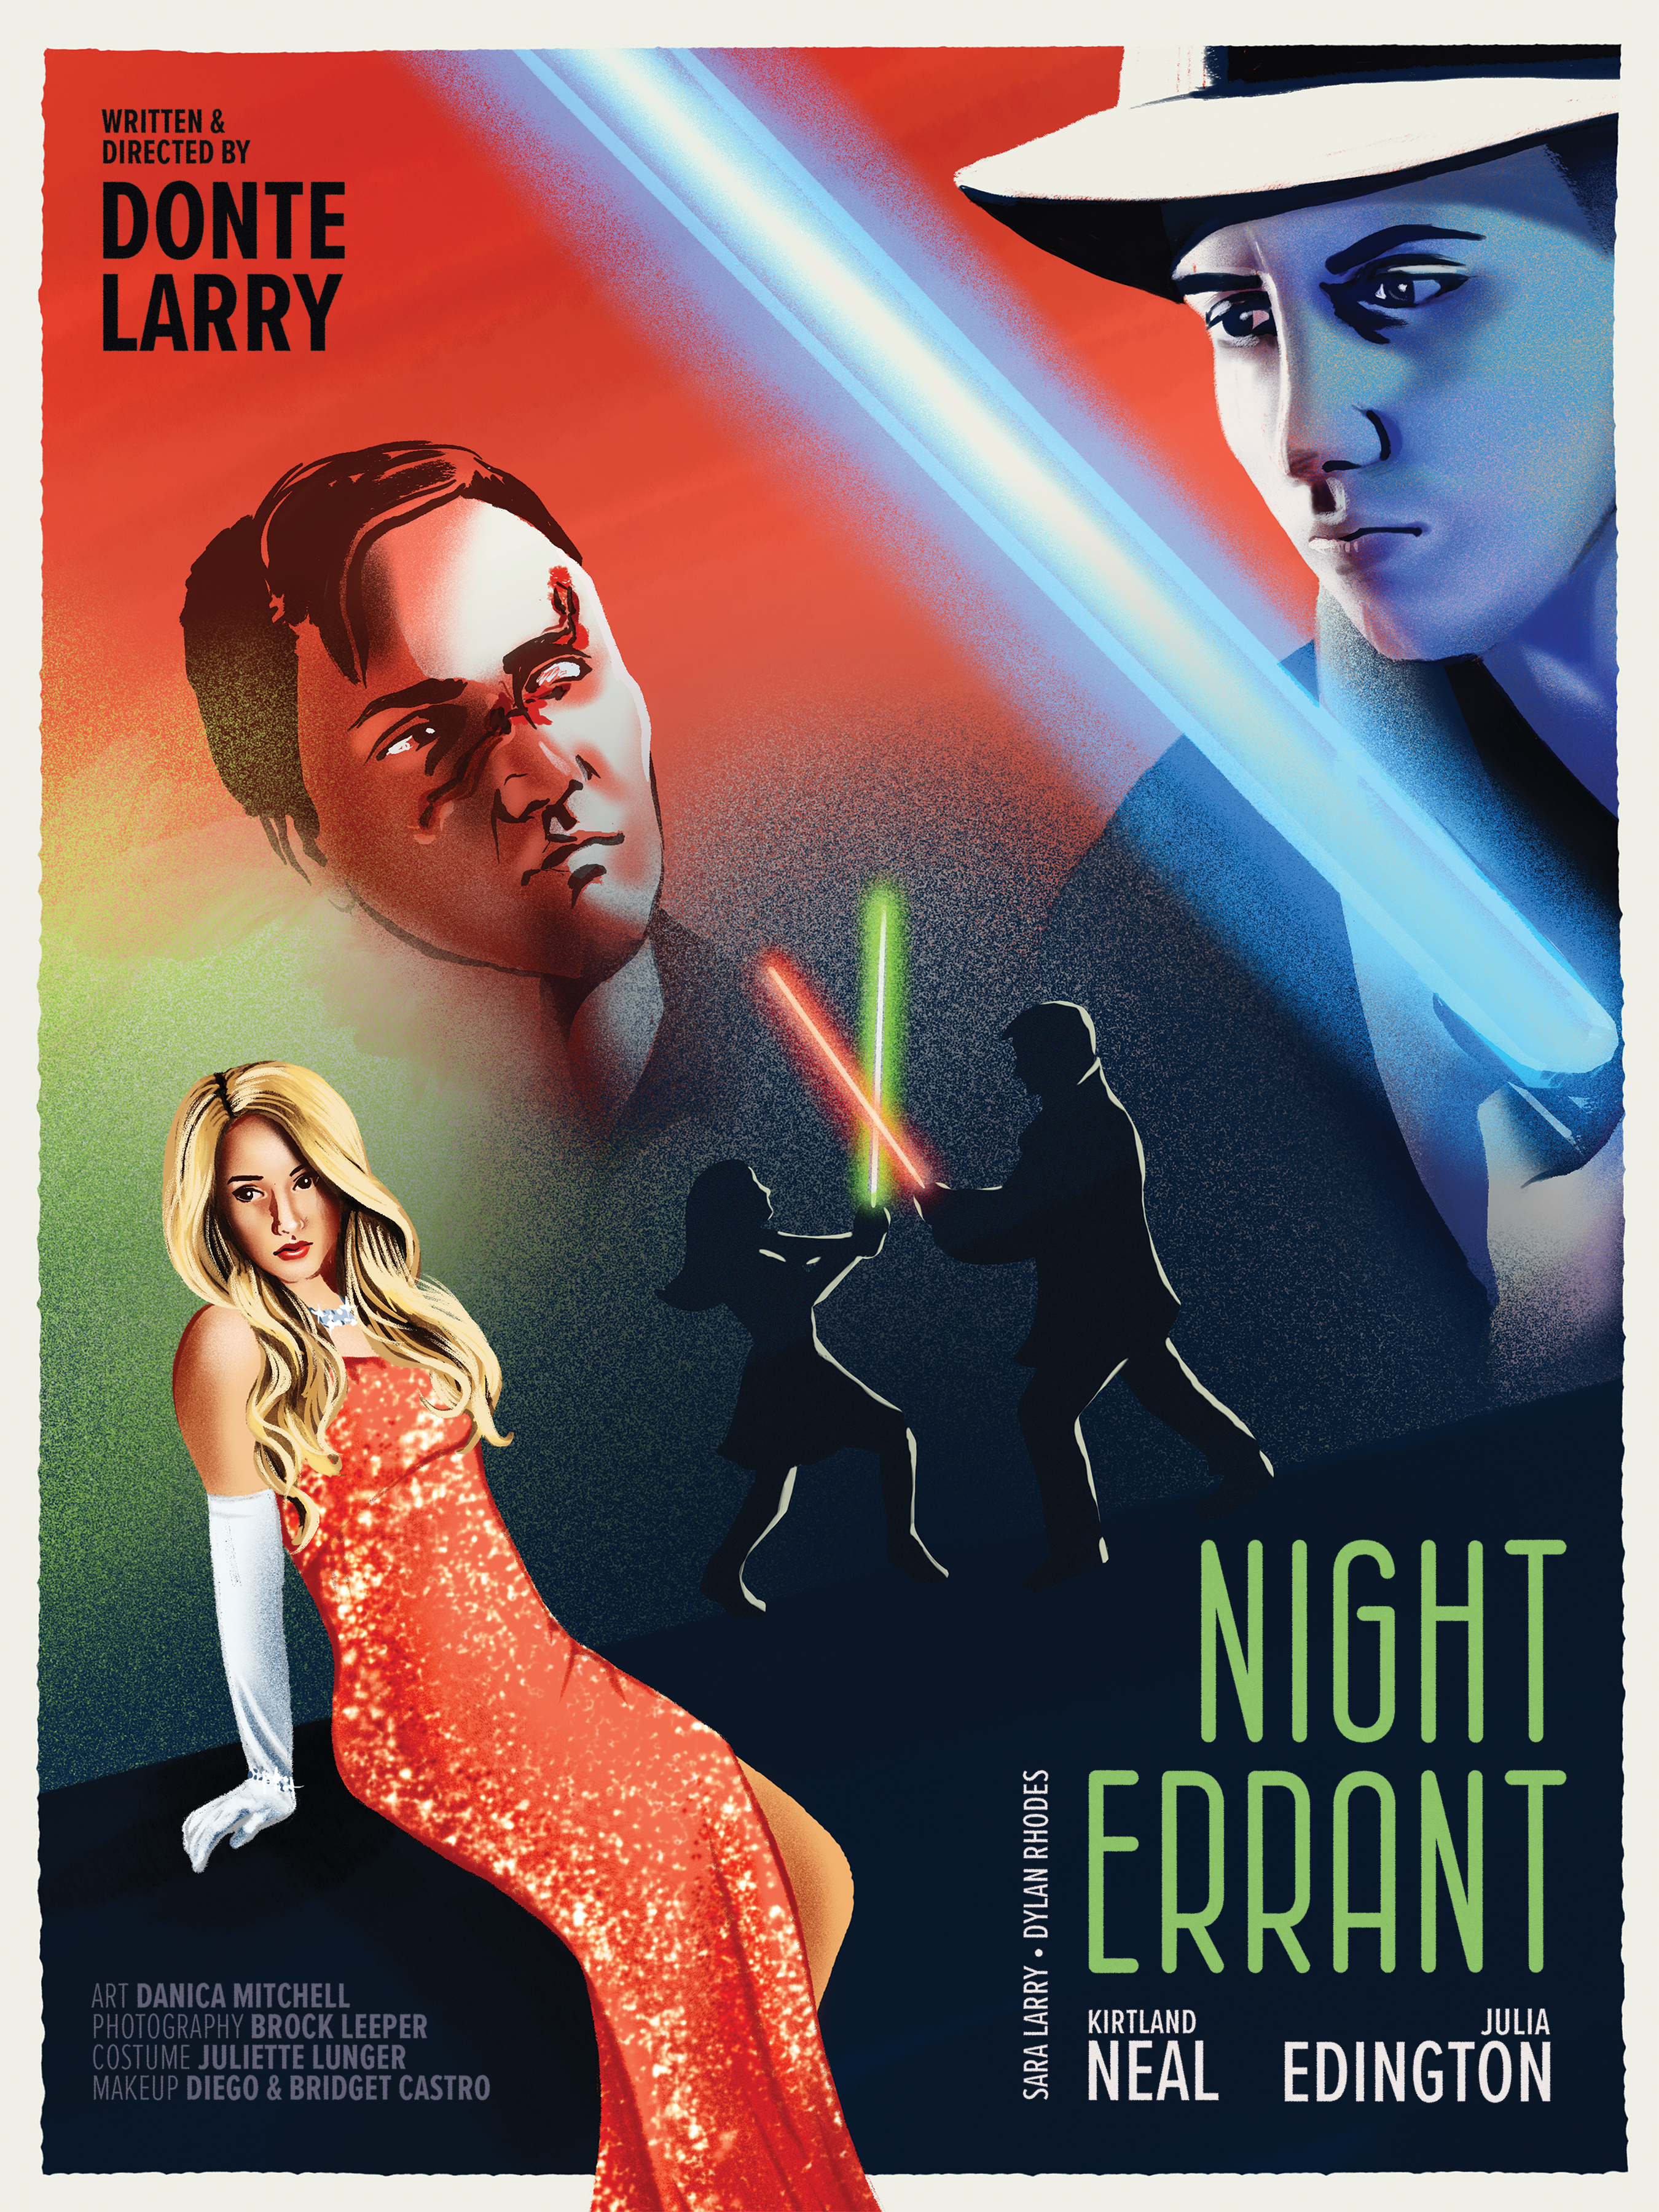 Night Errant: A Star Wars Noir